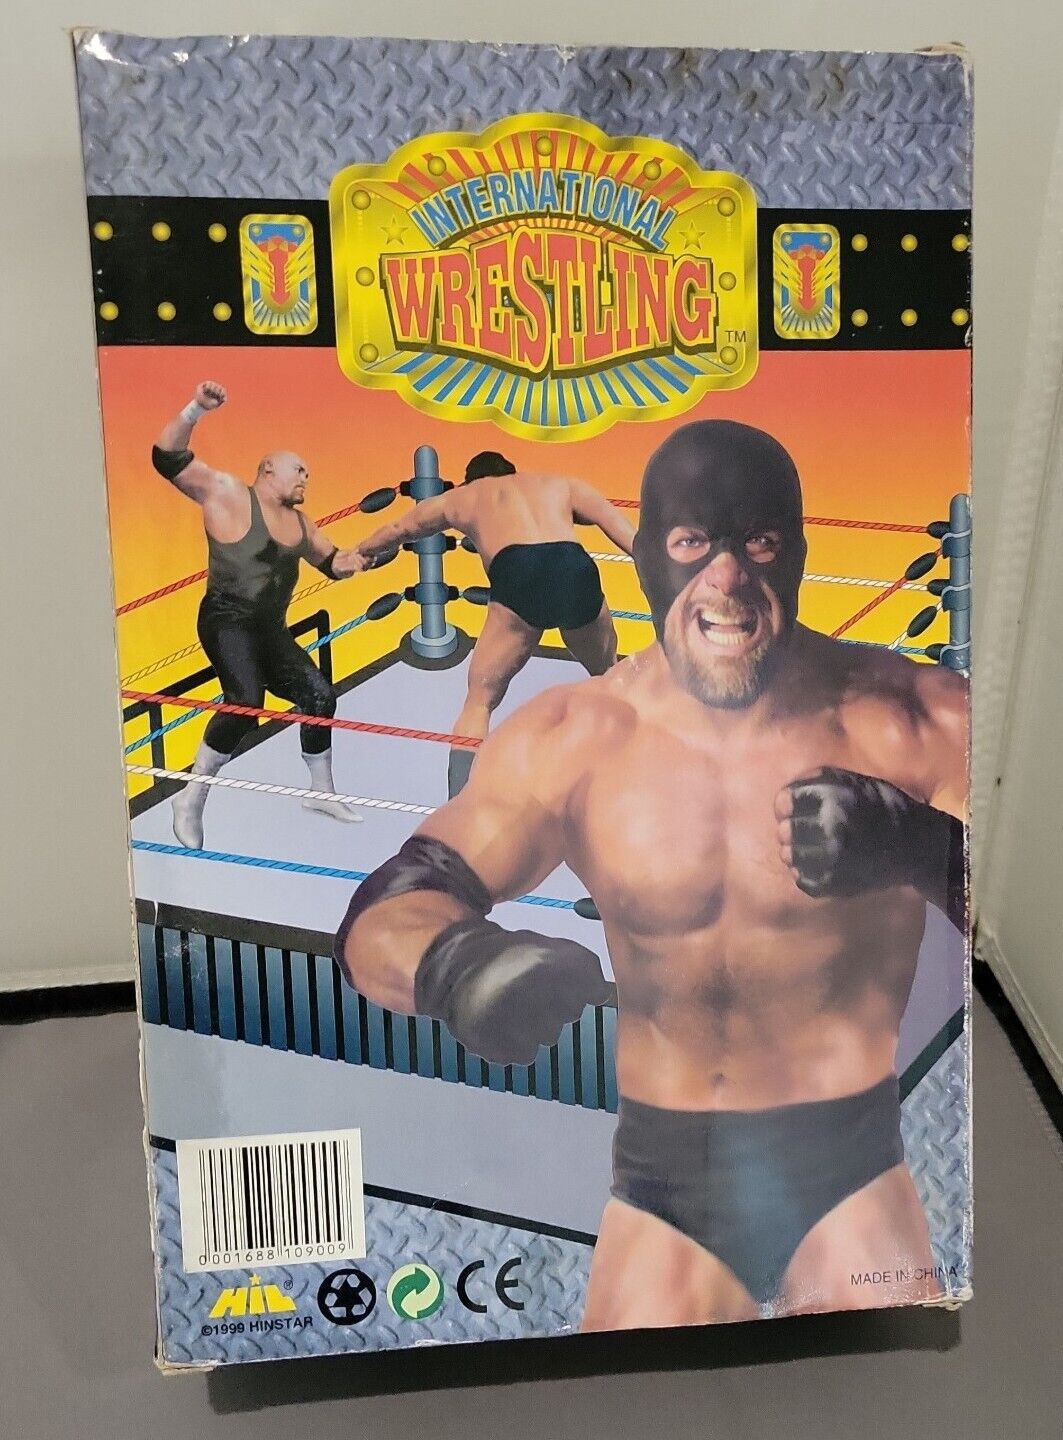 1999 Hinstar International Wrestling Bootleg/Knockoff 10" Wrestler